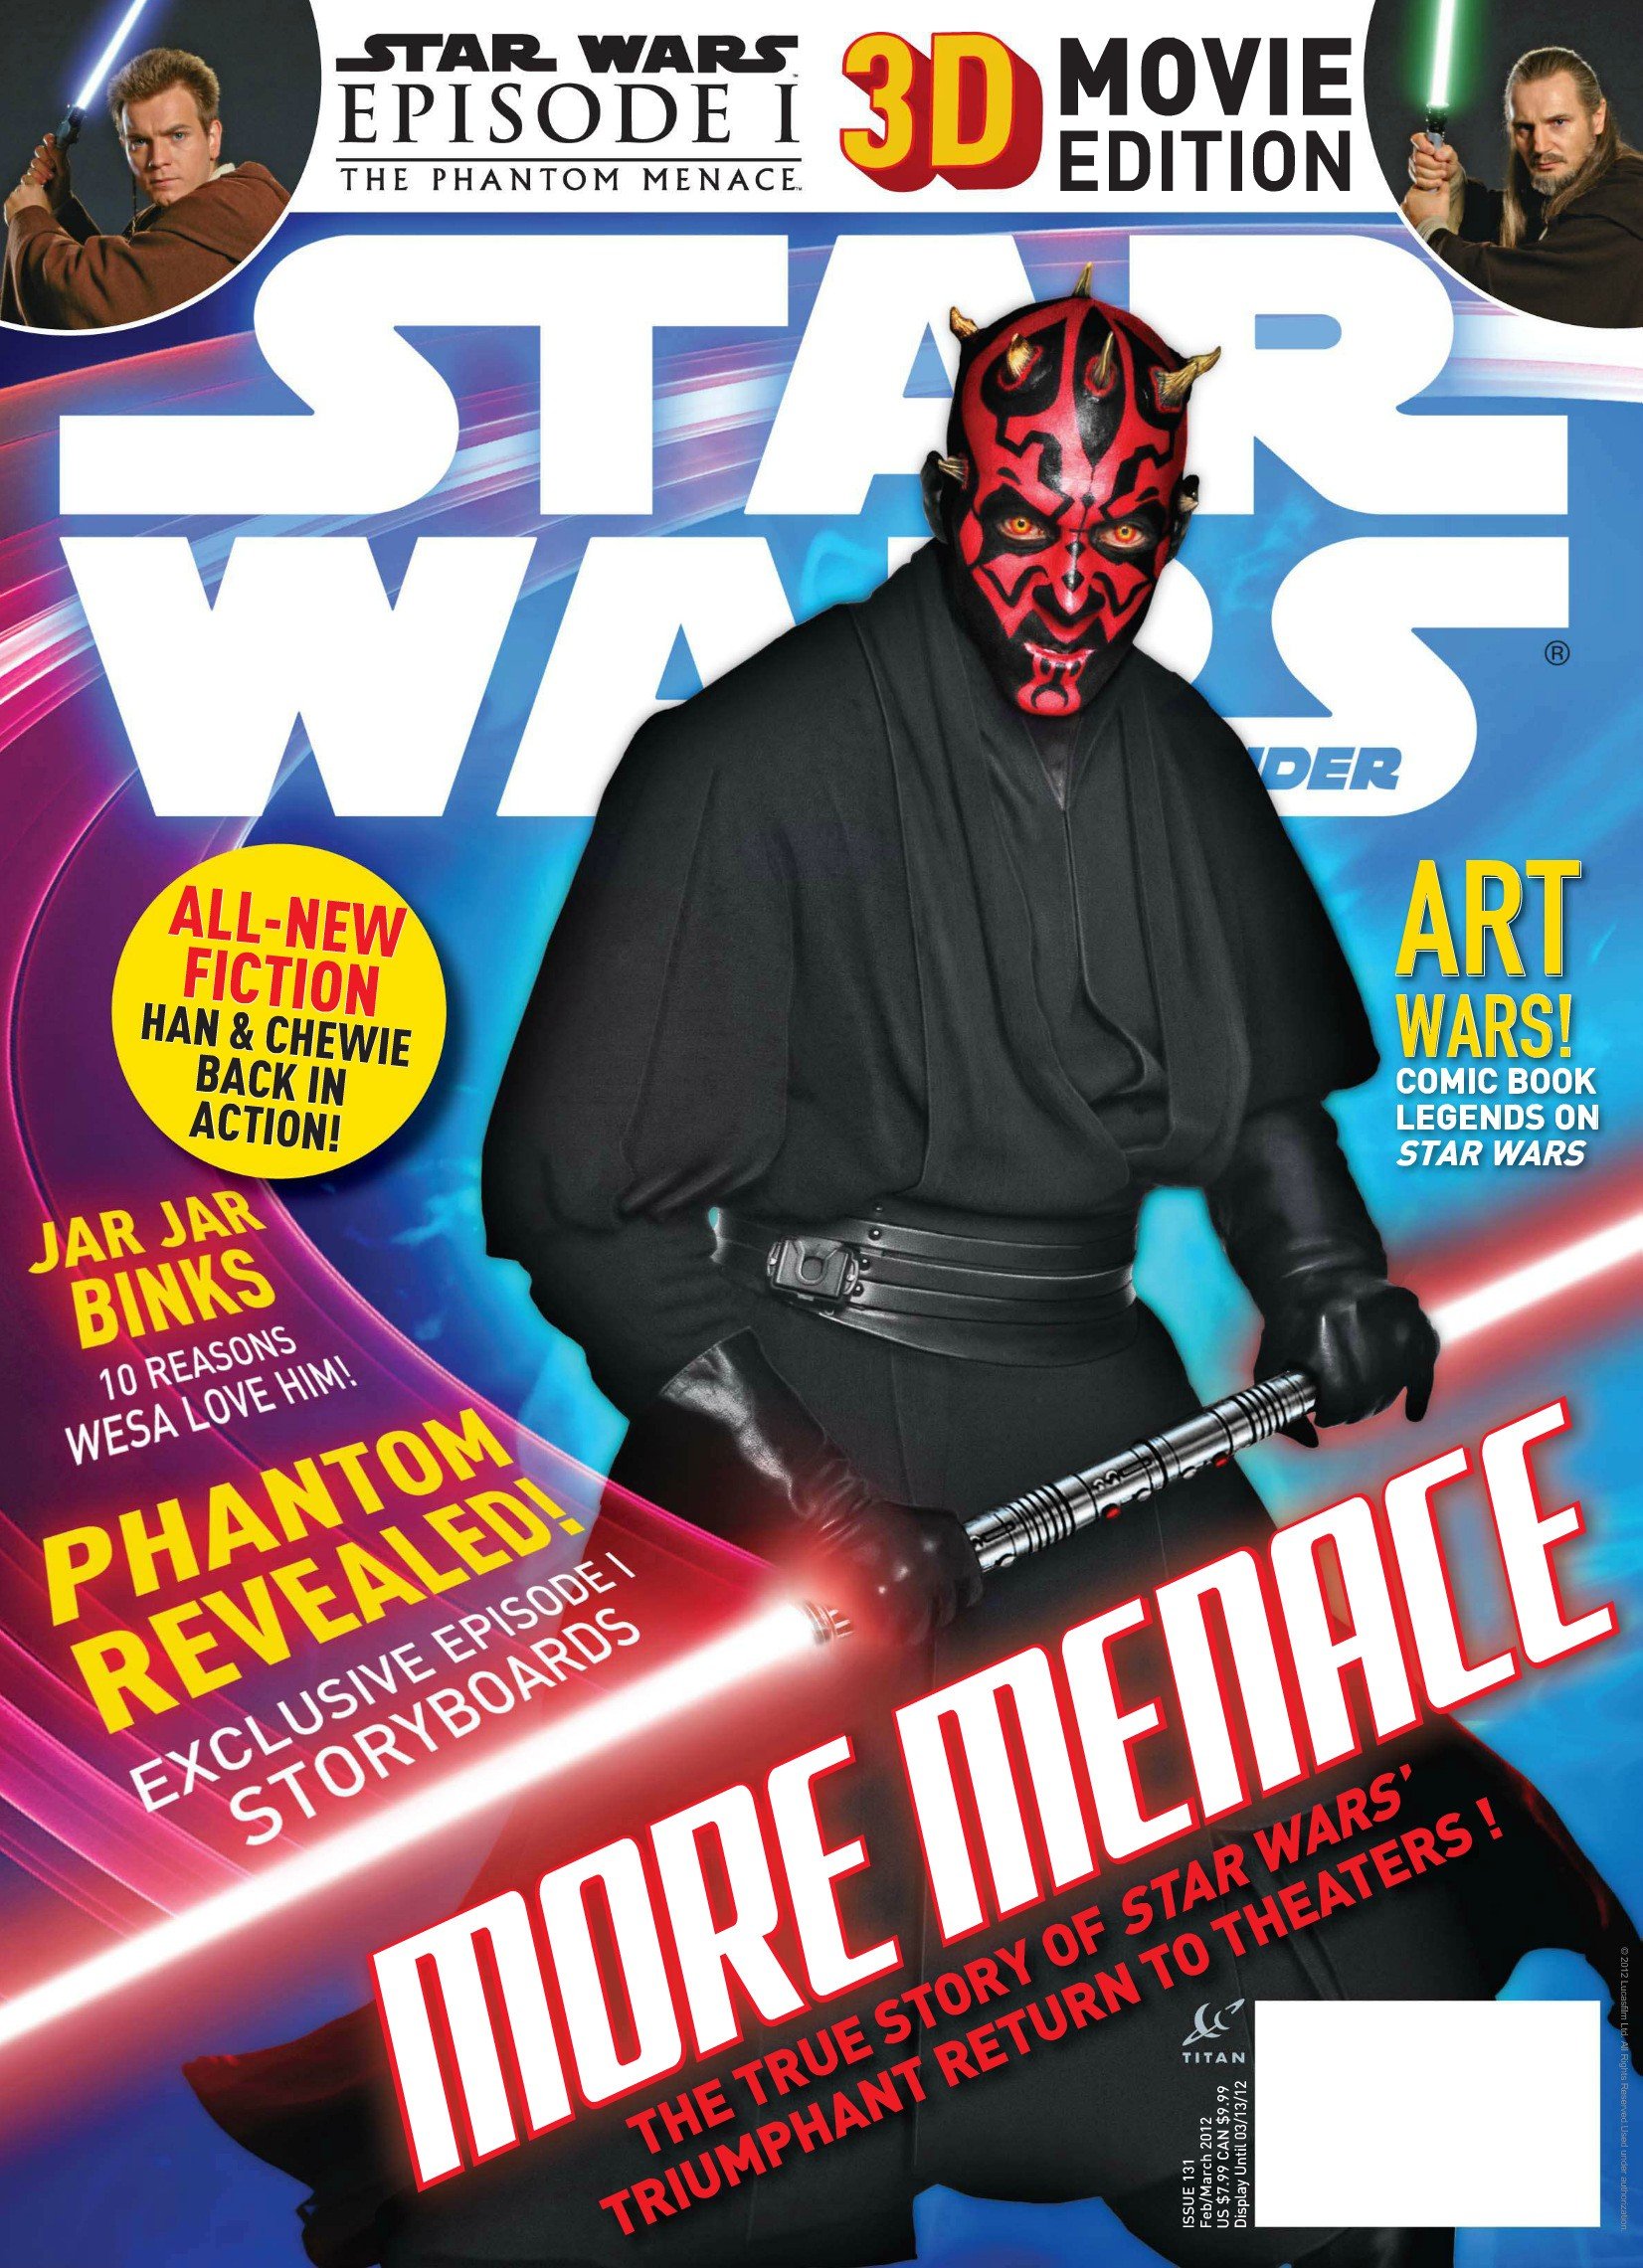 DARTH MAUL Ray Park Photo Cover Star Wars Insider # 131 Magazine 2012 